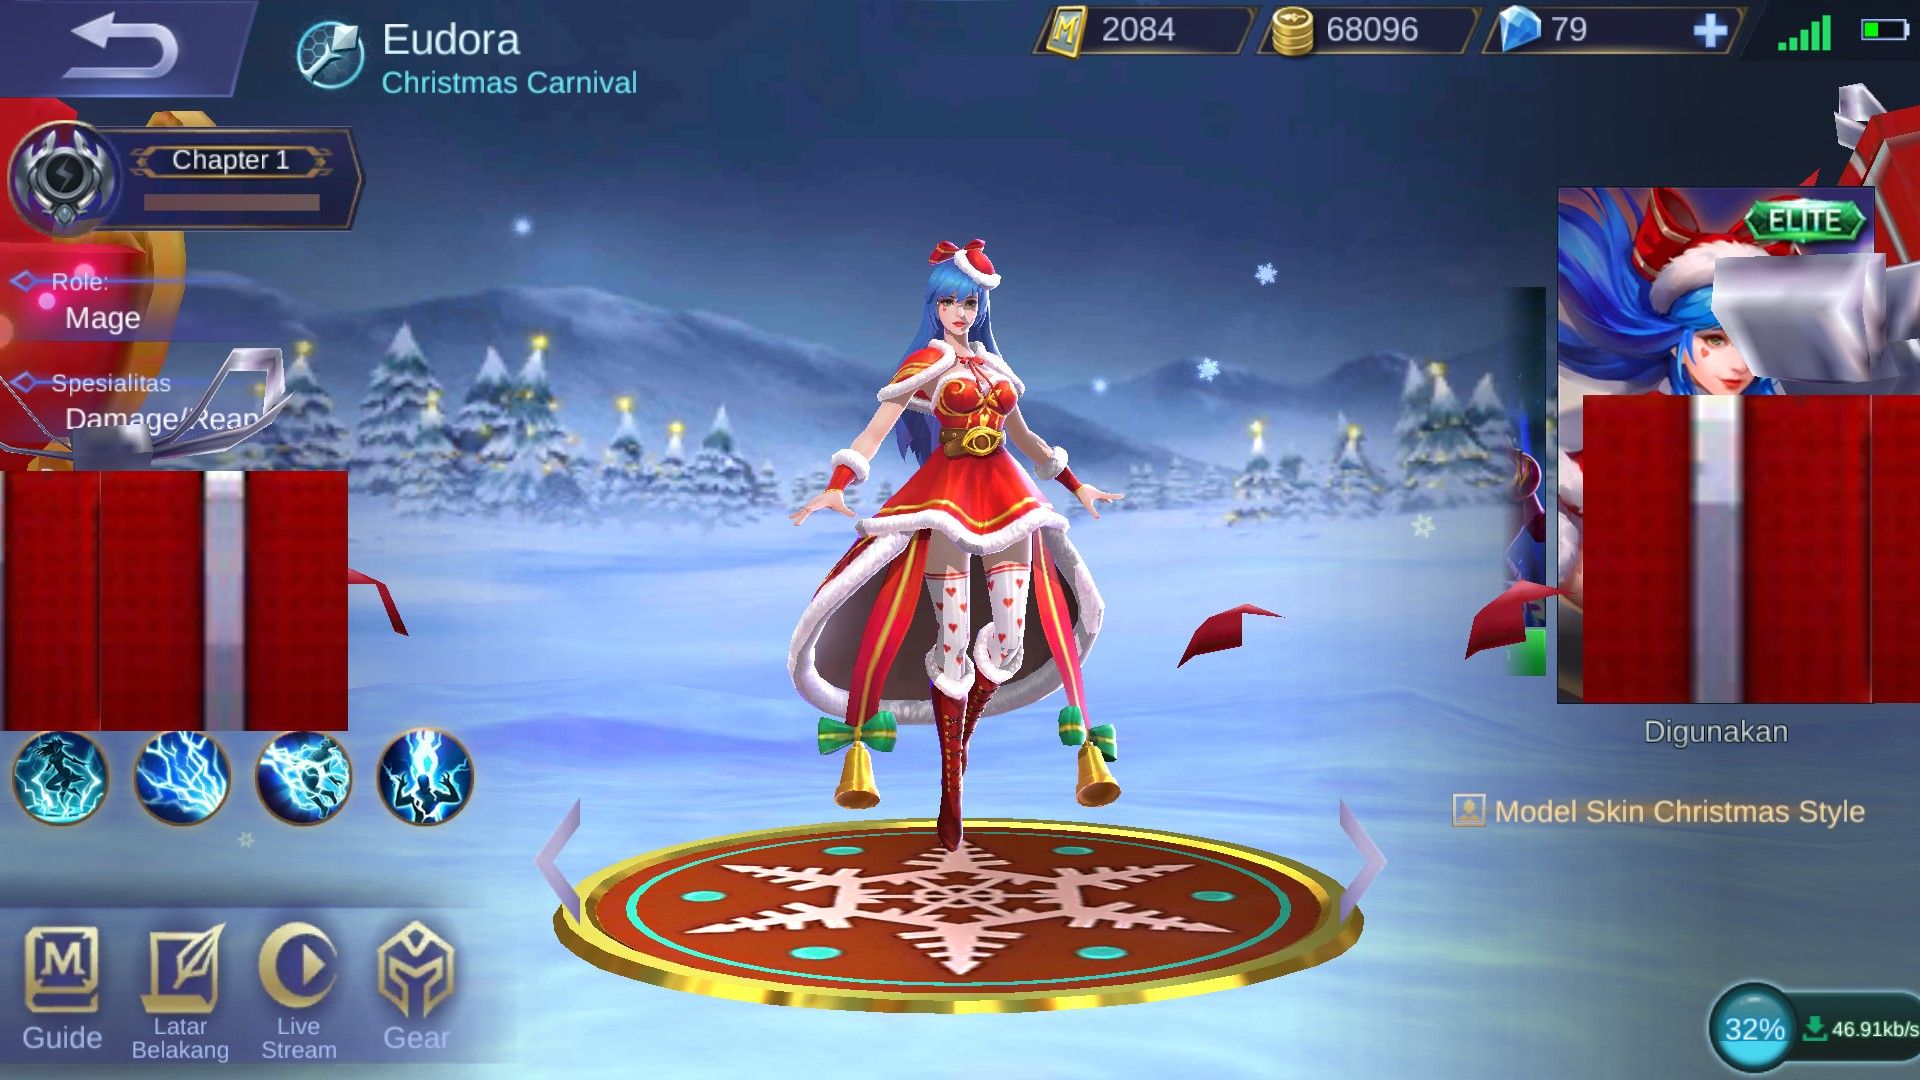 Eudora Mobile Legends skin Christmas Carnival